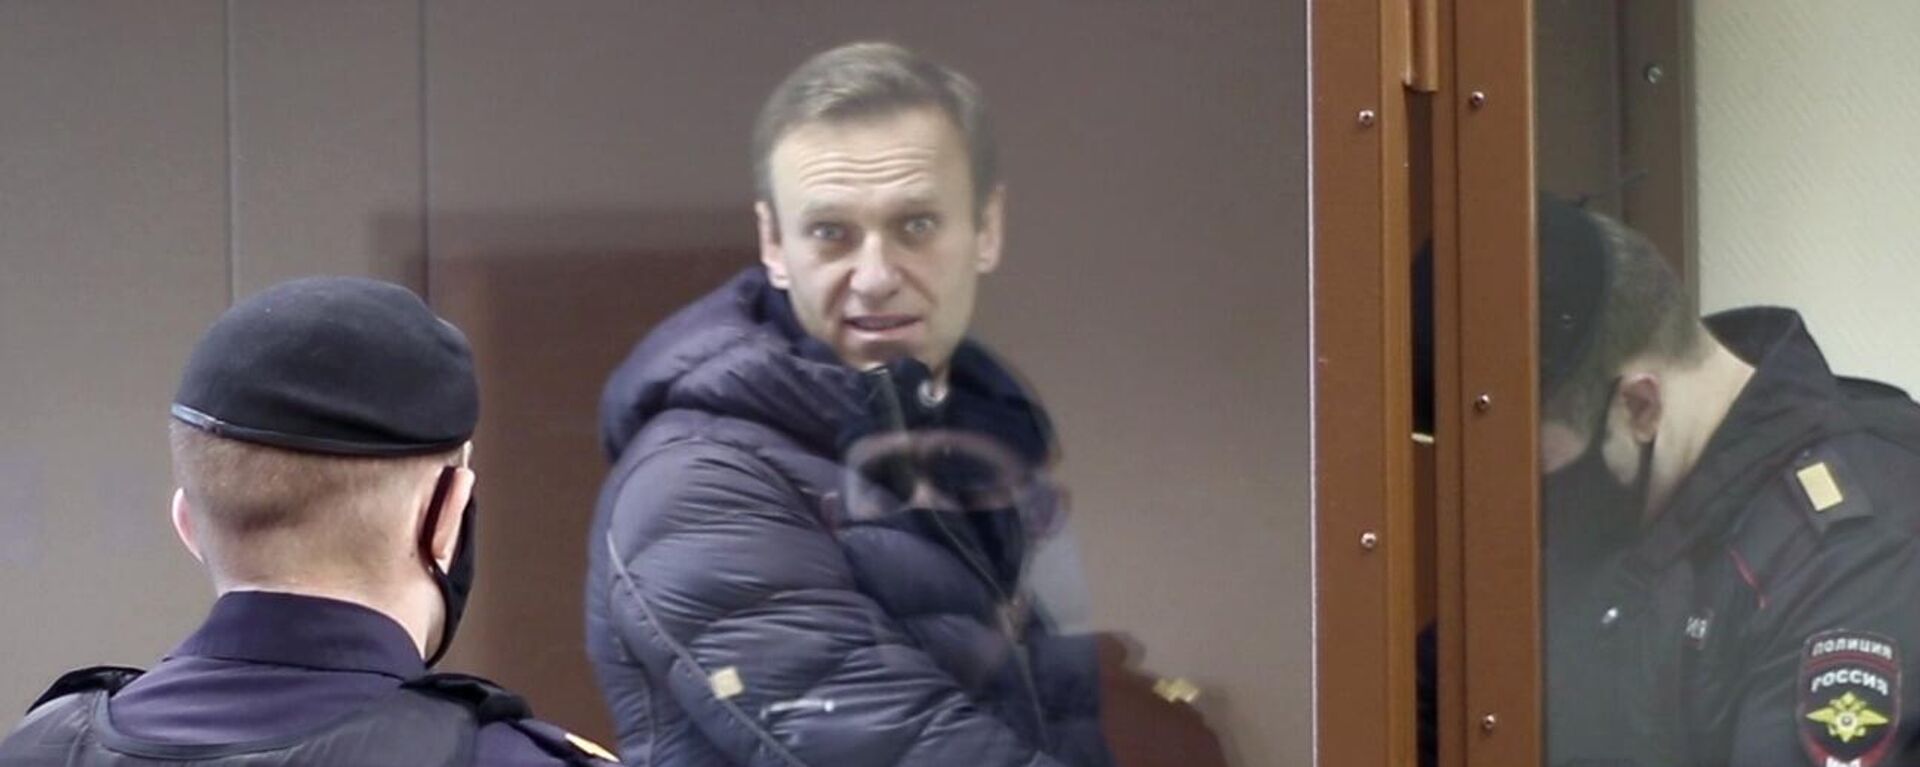 Alexéi Navalni, bloguero opositor ruso - Sputnik Mundo, 1920, 19.02.2021